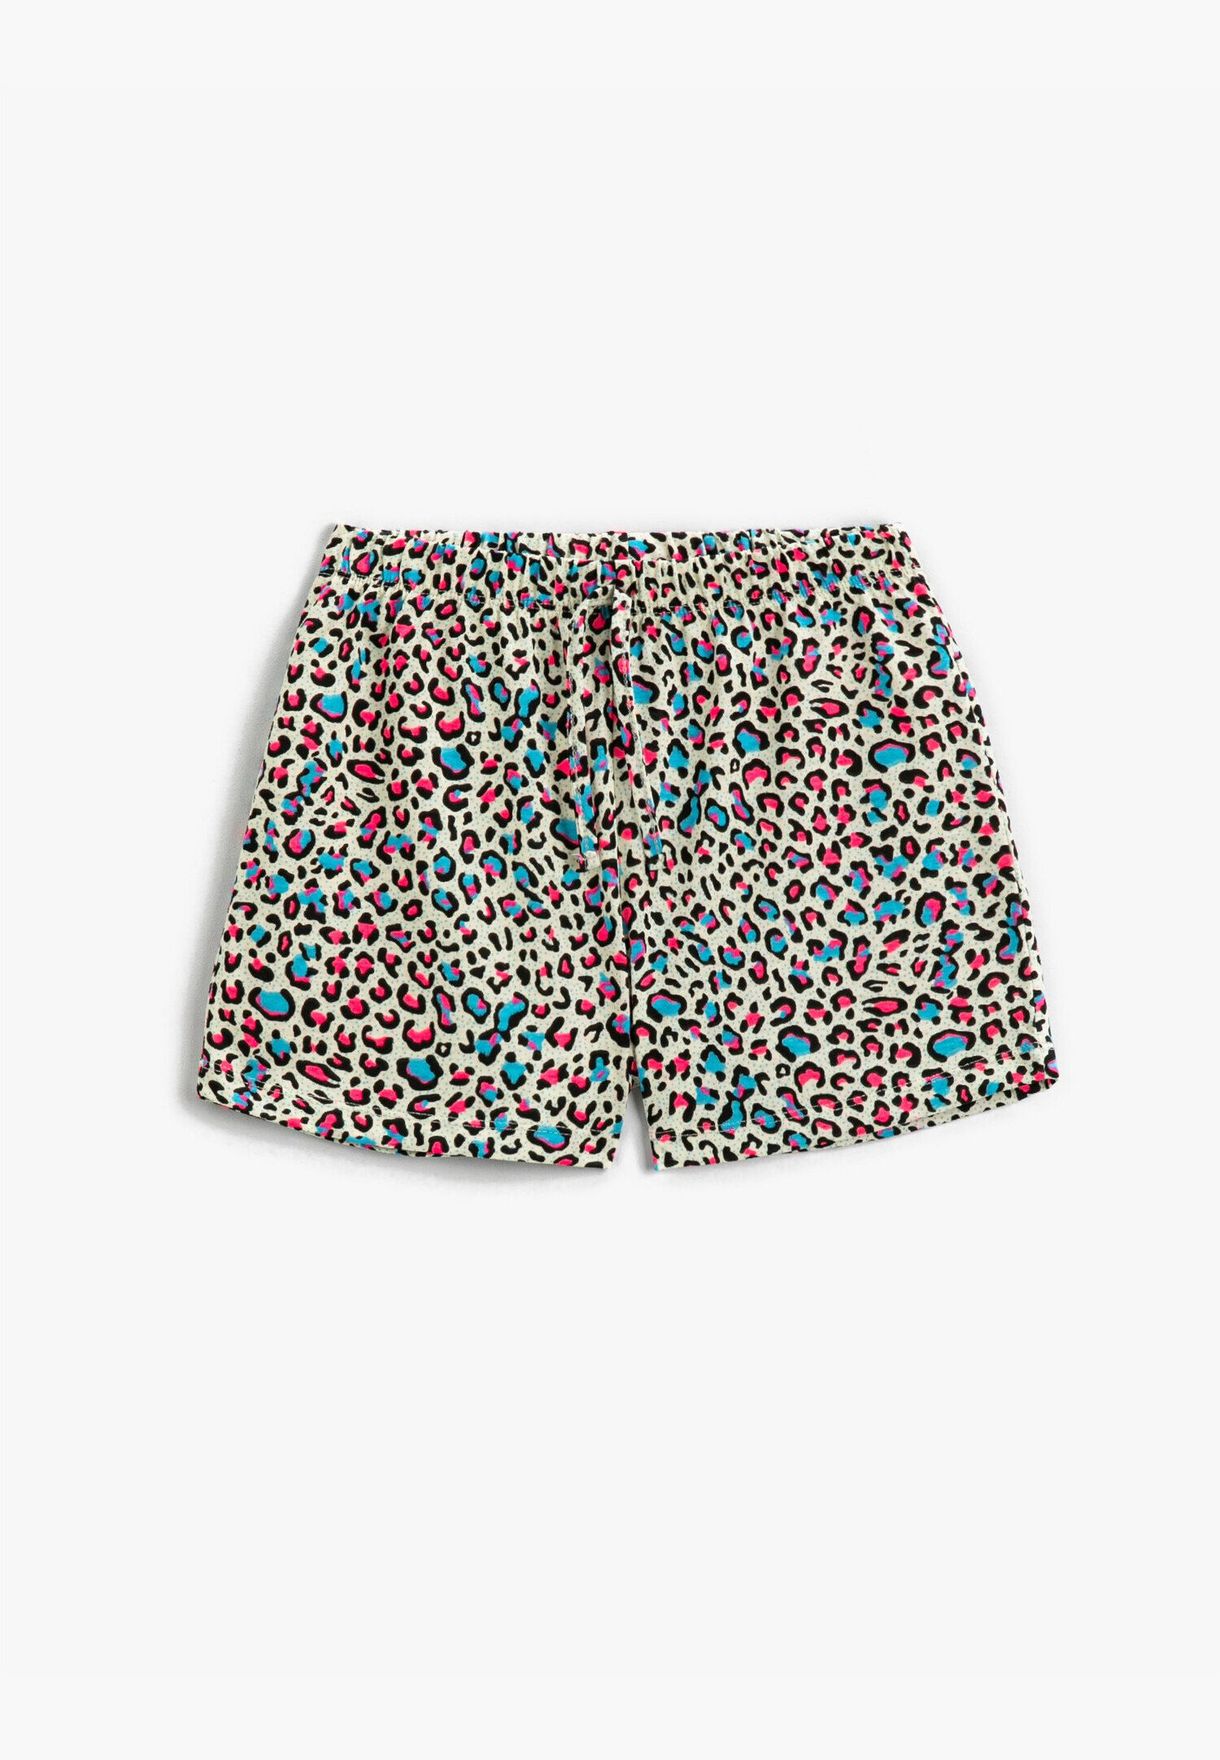 Leopard Patterned Shorts Cotton Drawstring